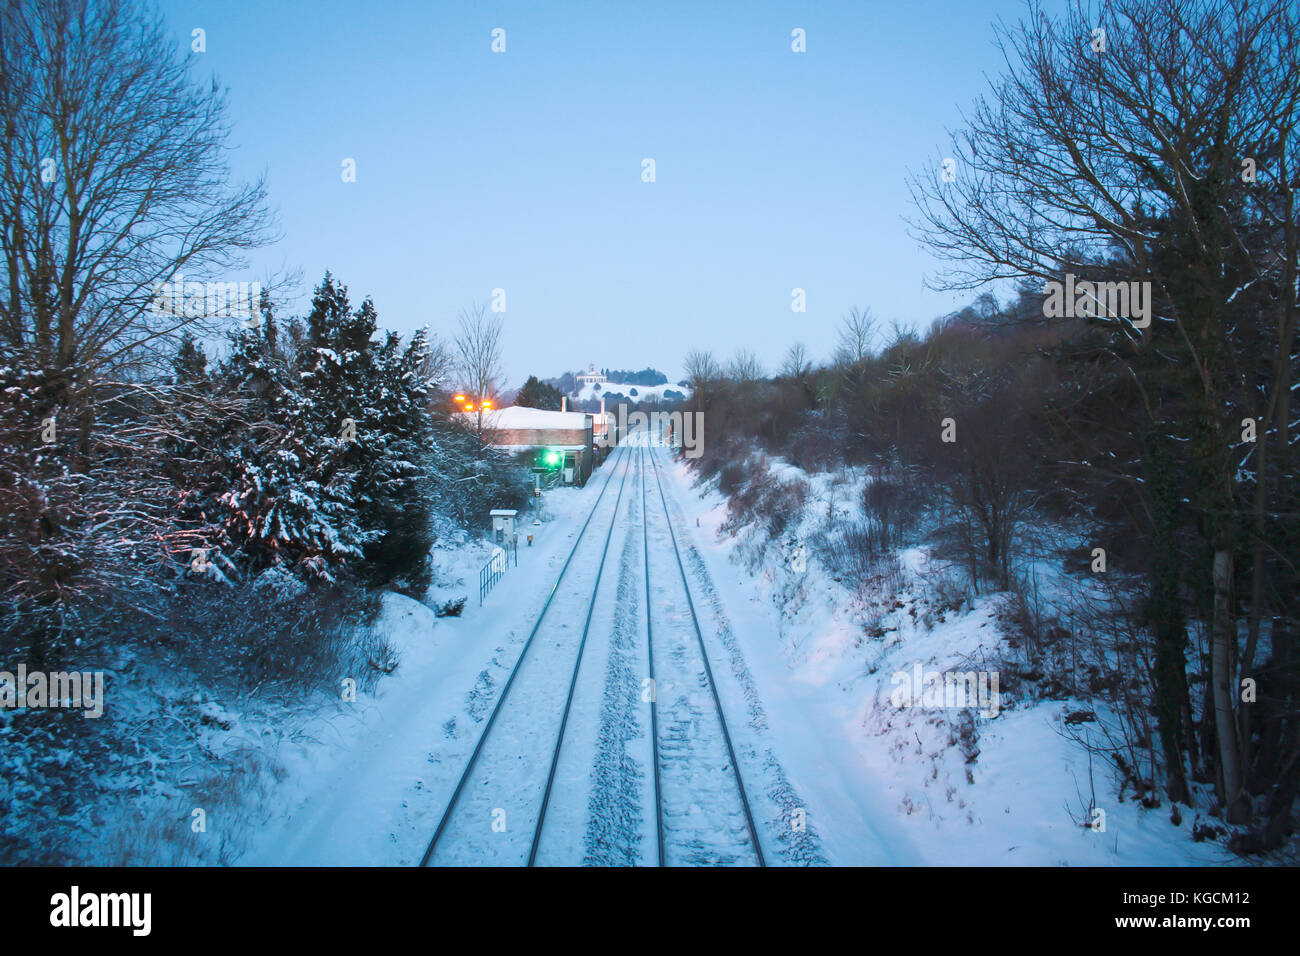 Snow on train tracks Stock Photo